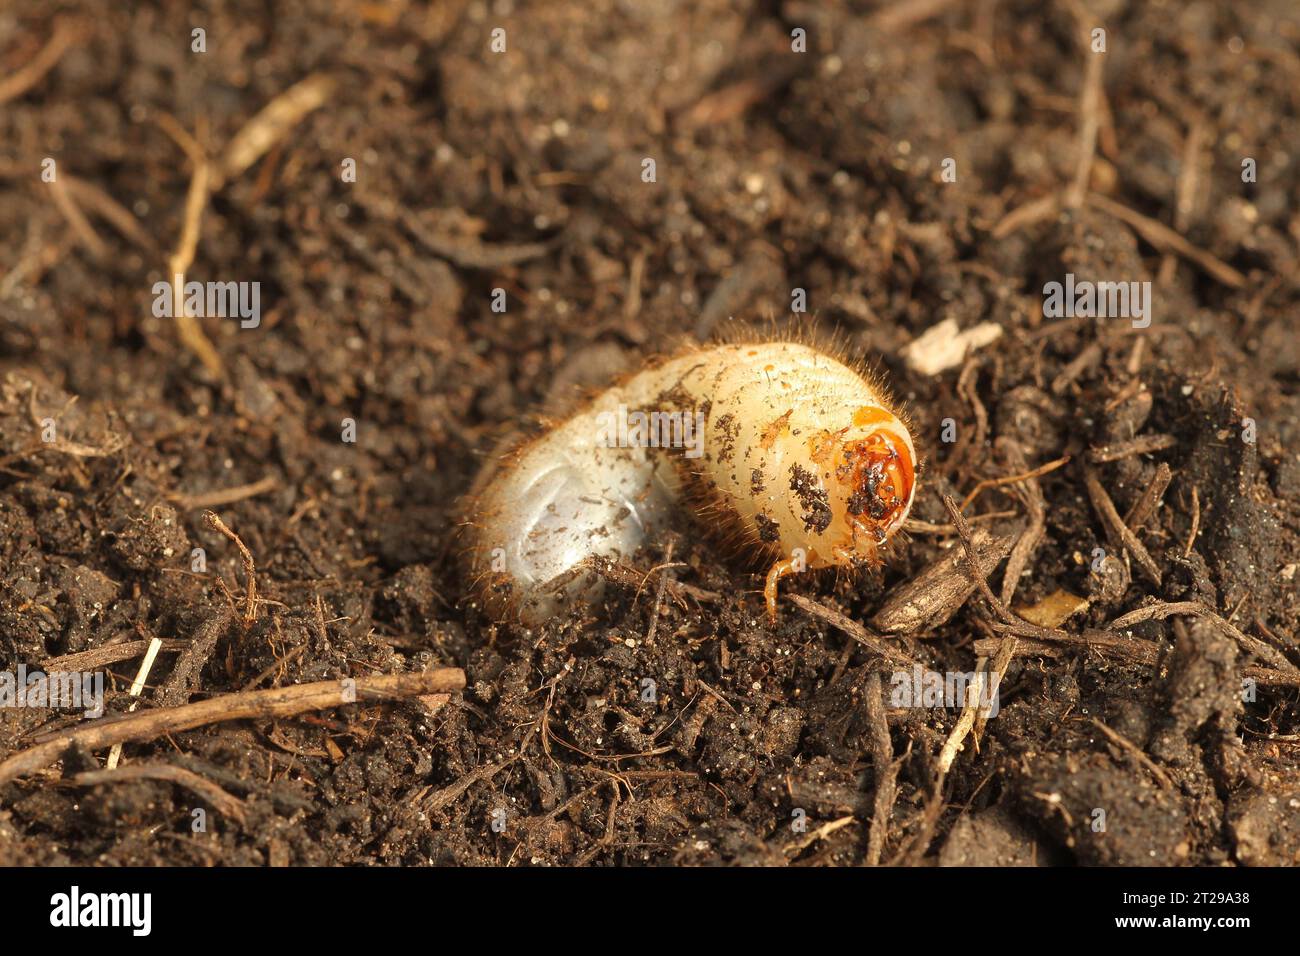 European june beetle (Amphimallon solstitiale) larva grub, Allgaeu, Bavaria, Germany Stock Photo